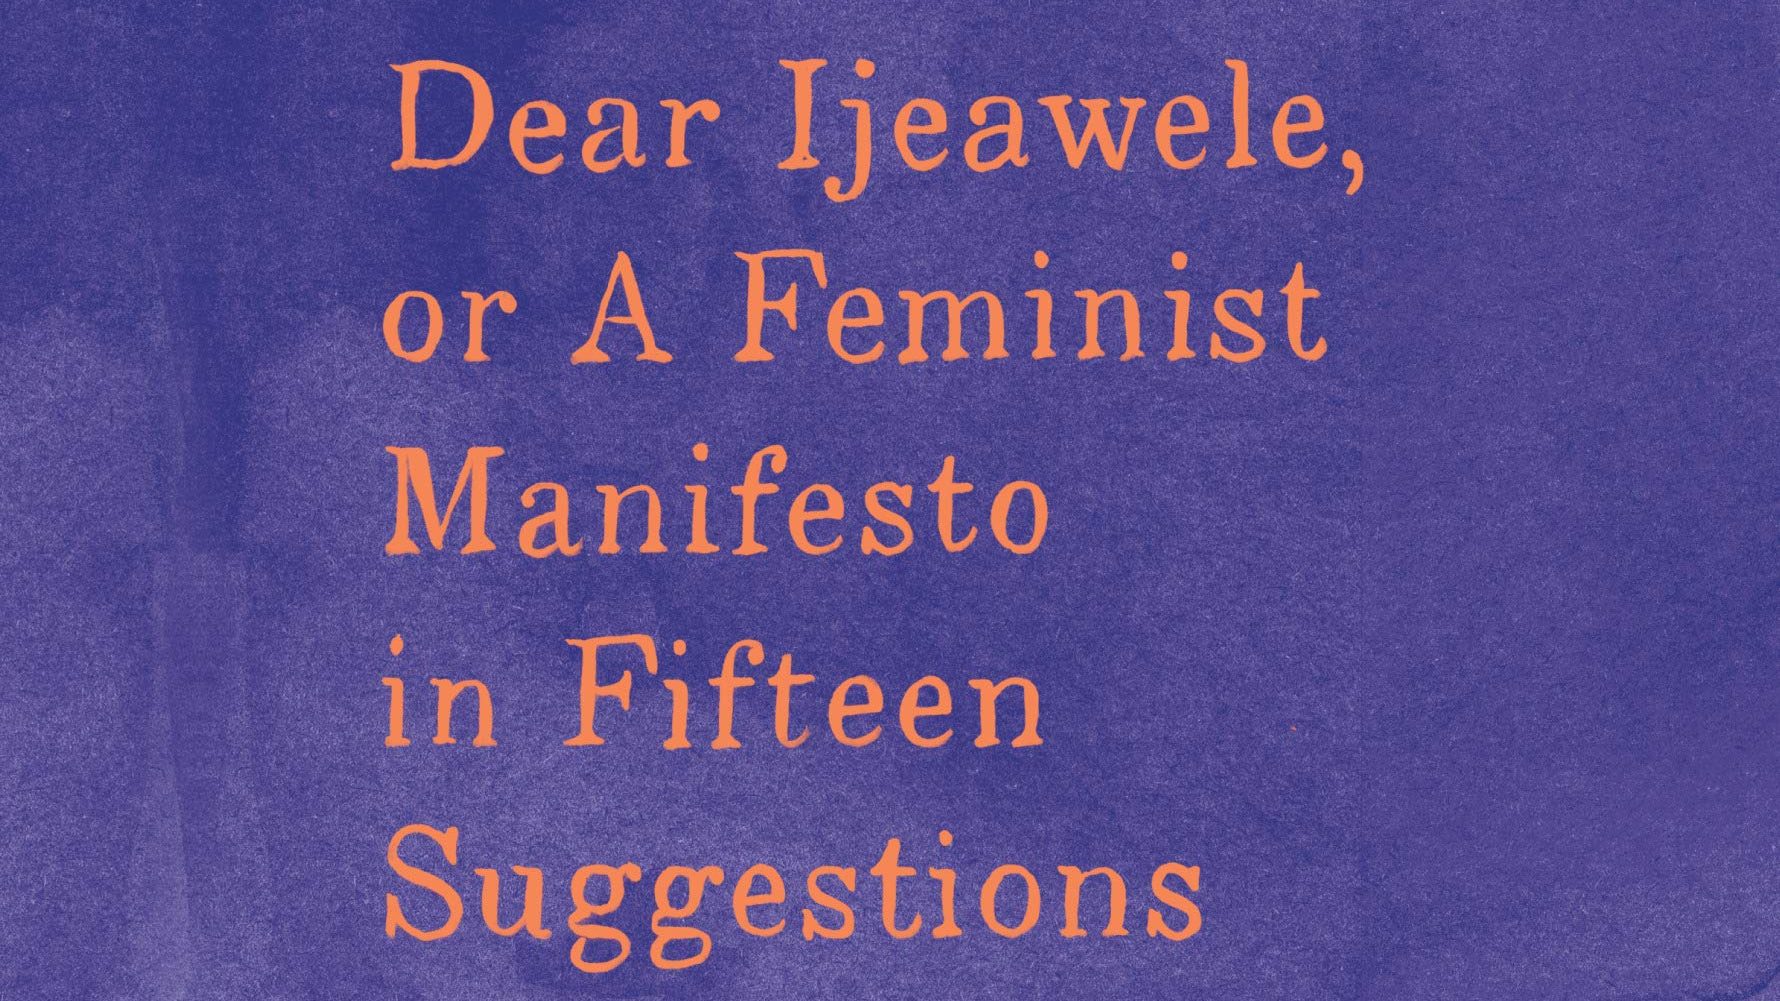 The Blazing World as Feminist Manifesto